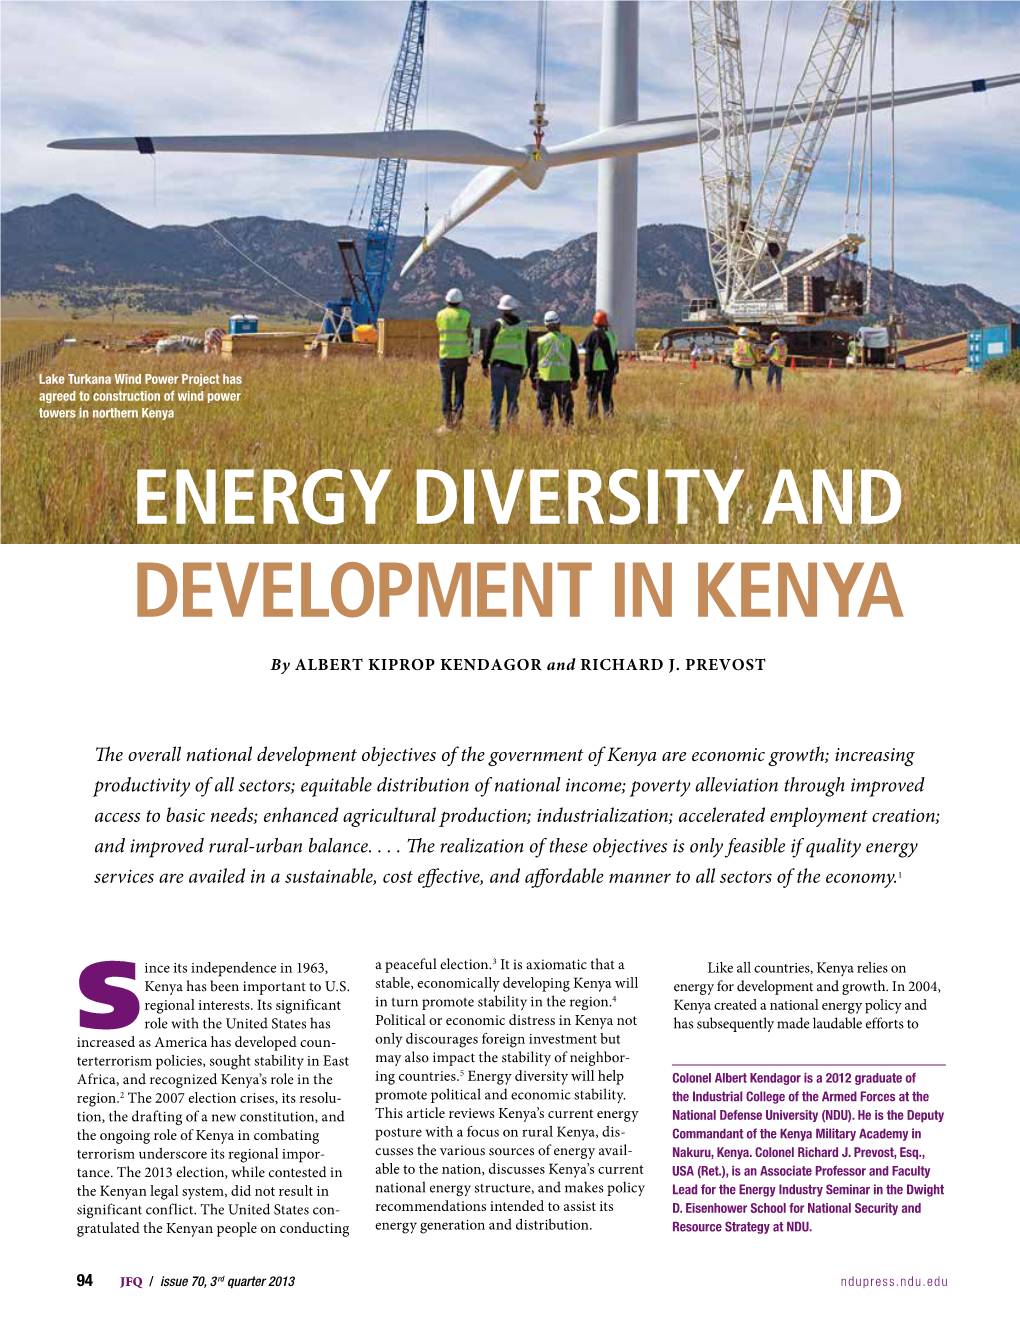 Energy Diversity and Development in Kenya